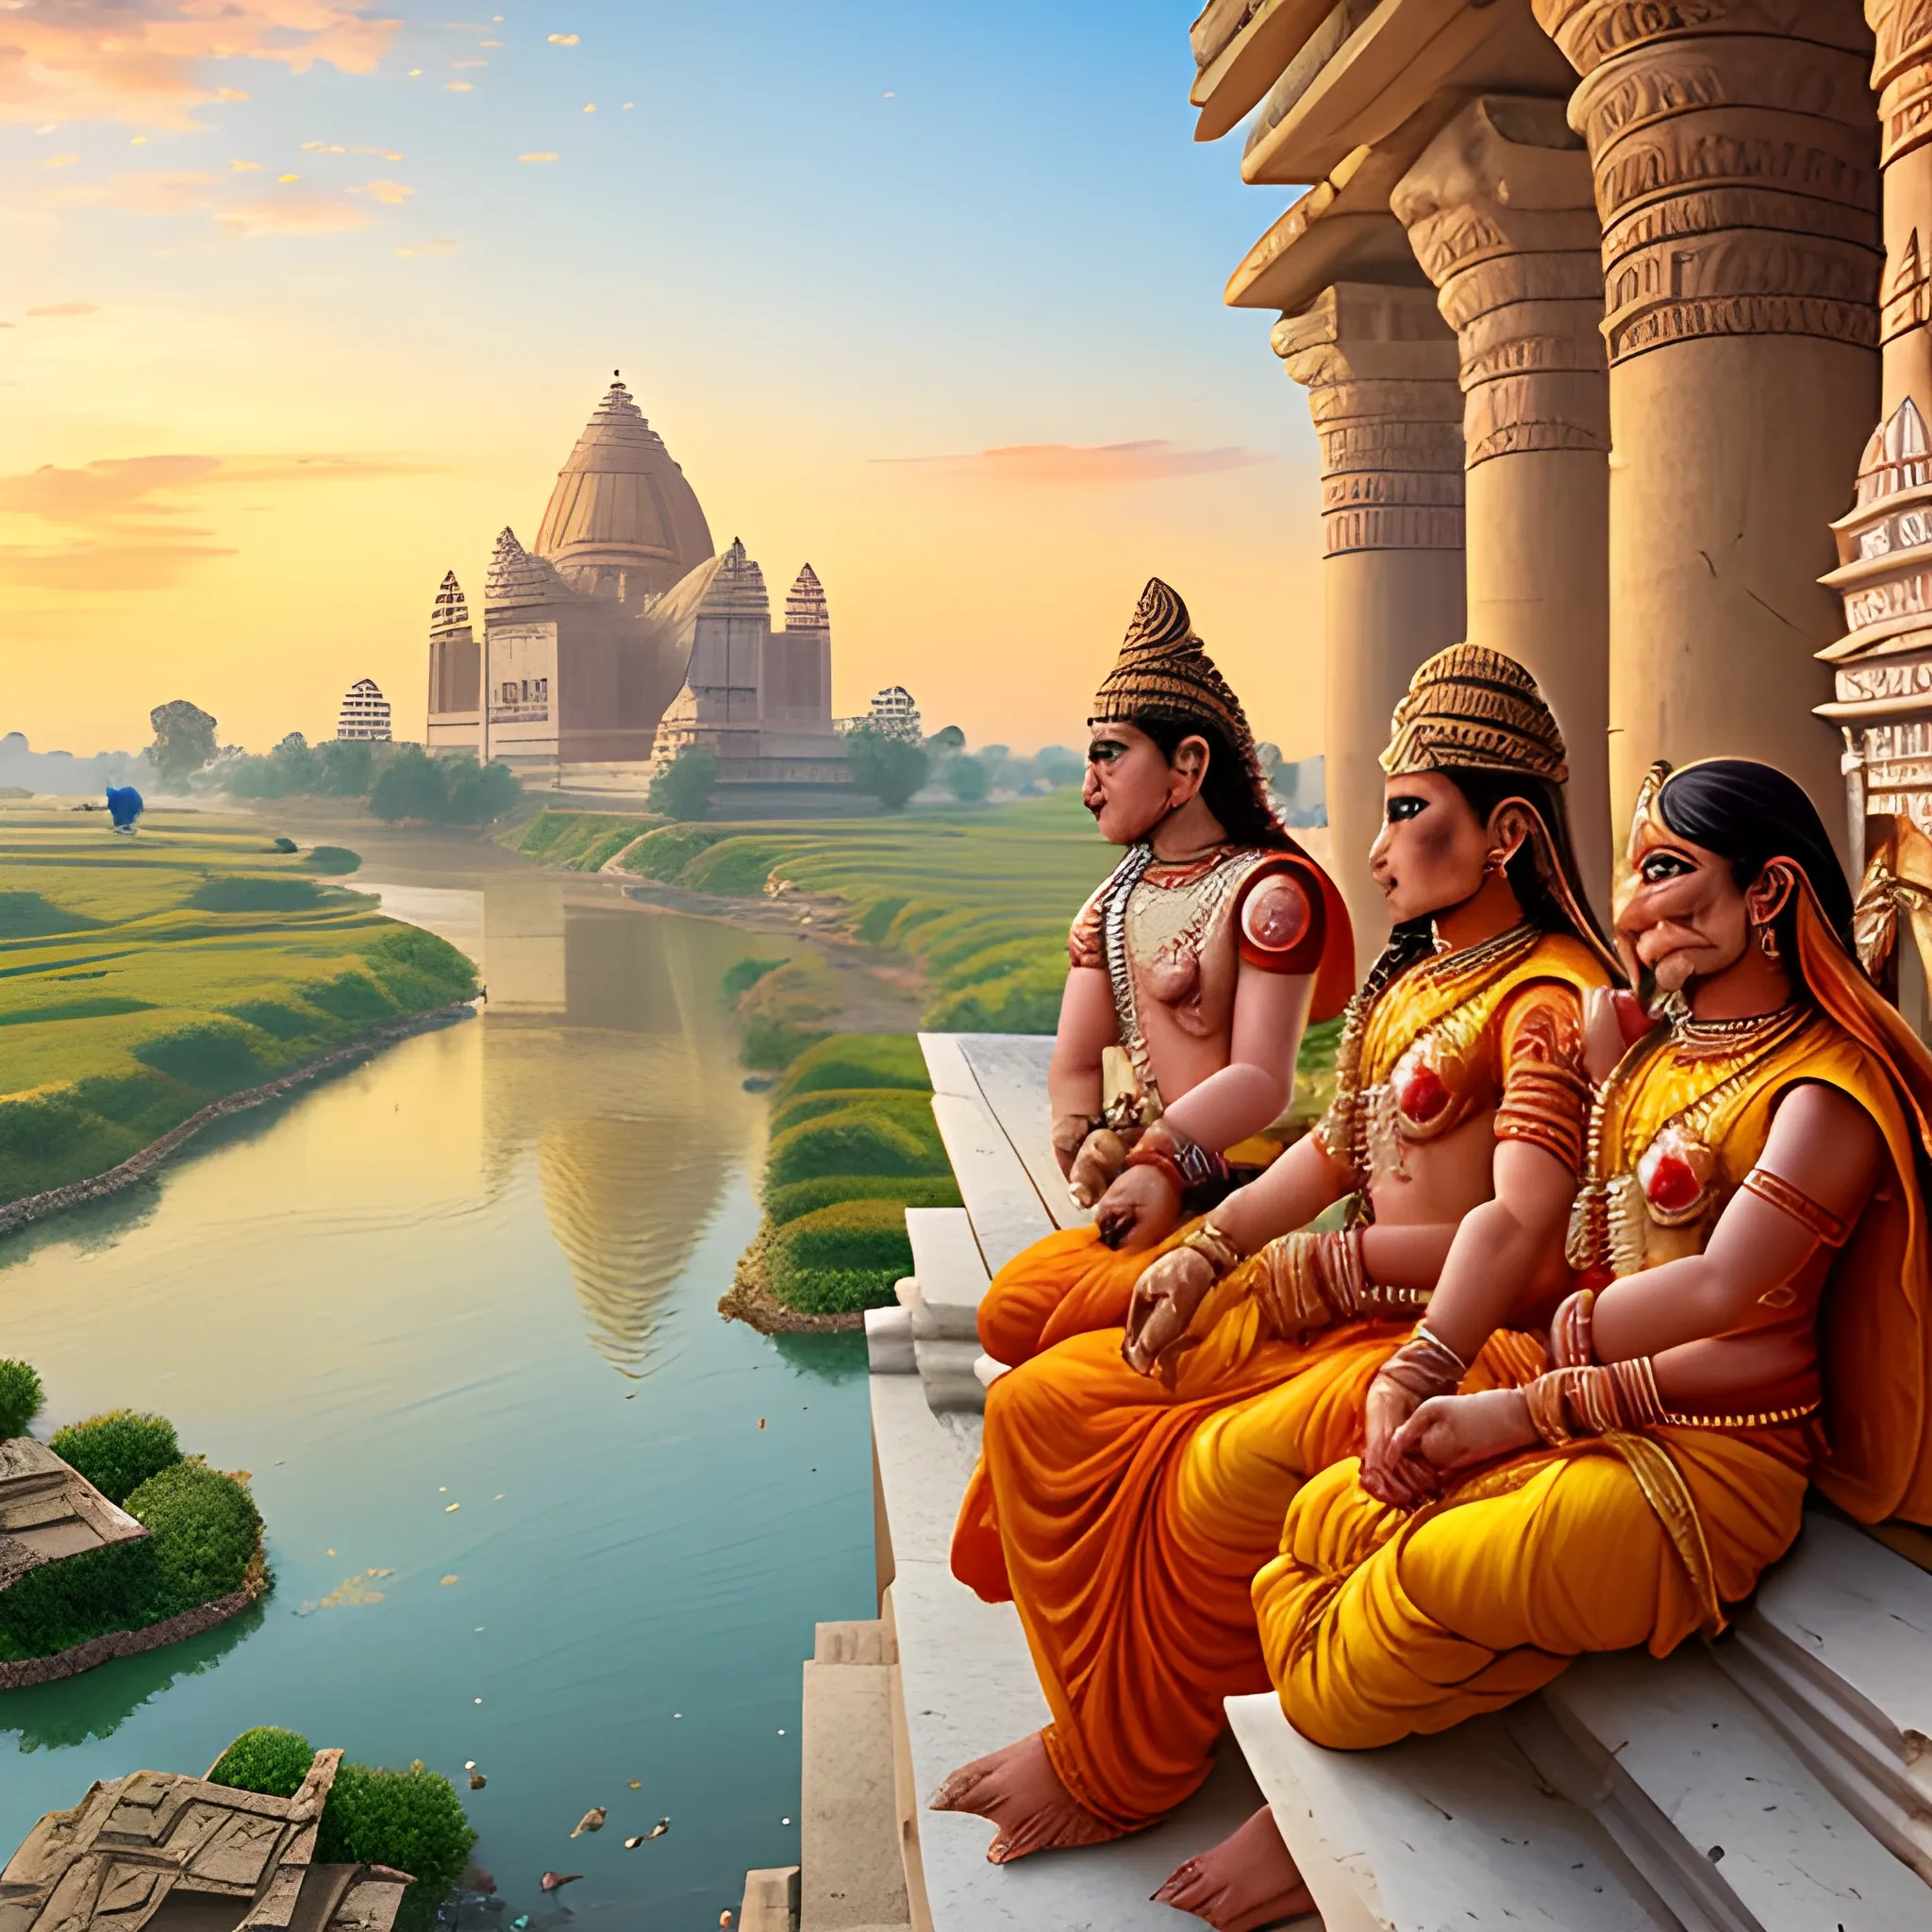 a scene from Ramayan located in Ayodhya, Vedic period, high defi ...